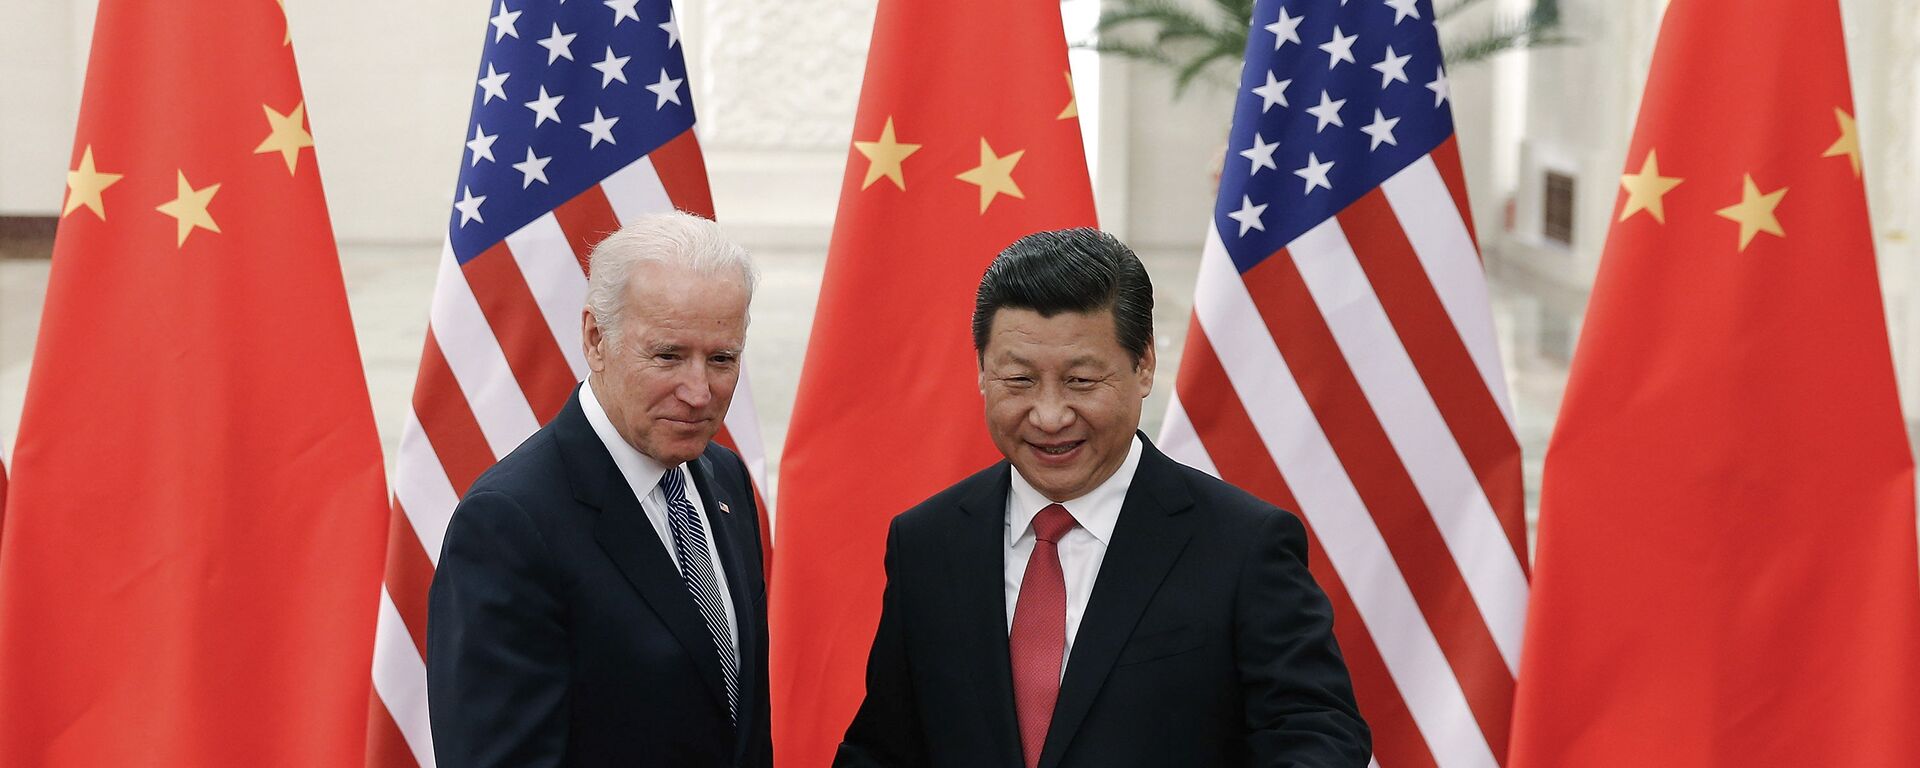 El presidente chino, Xi Jinping con su homólogo de EEUU, Joe Biden - Sputnik Mundo, 1920, 17.12.2021